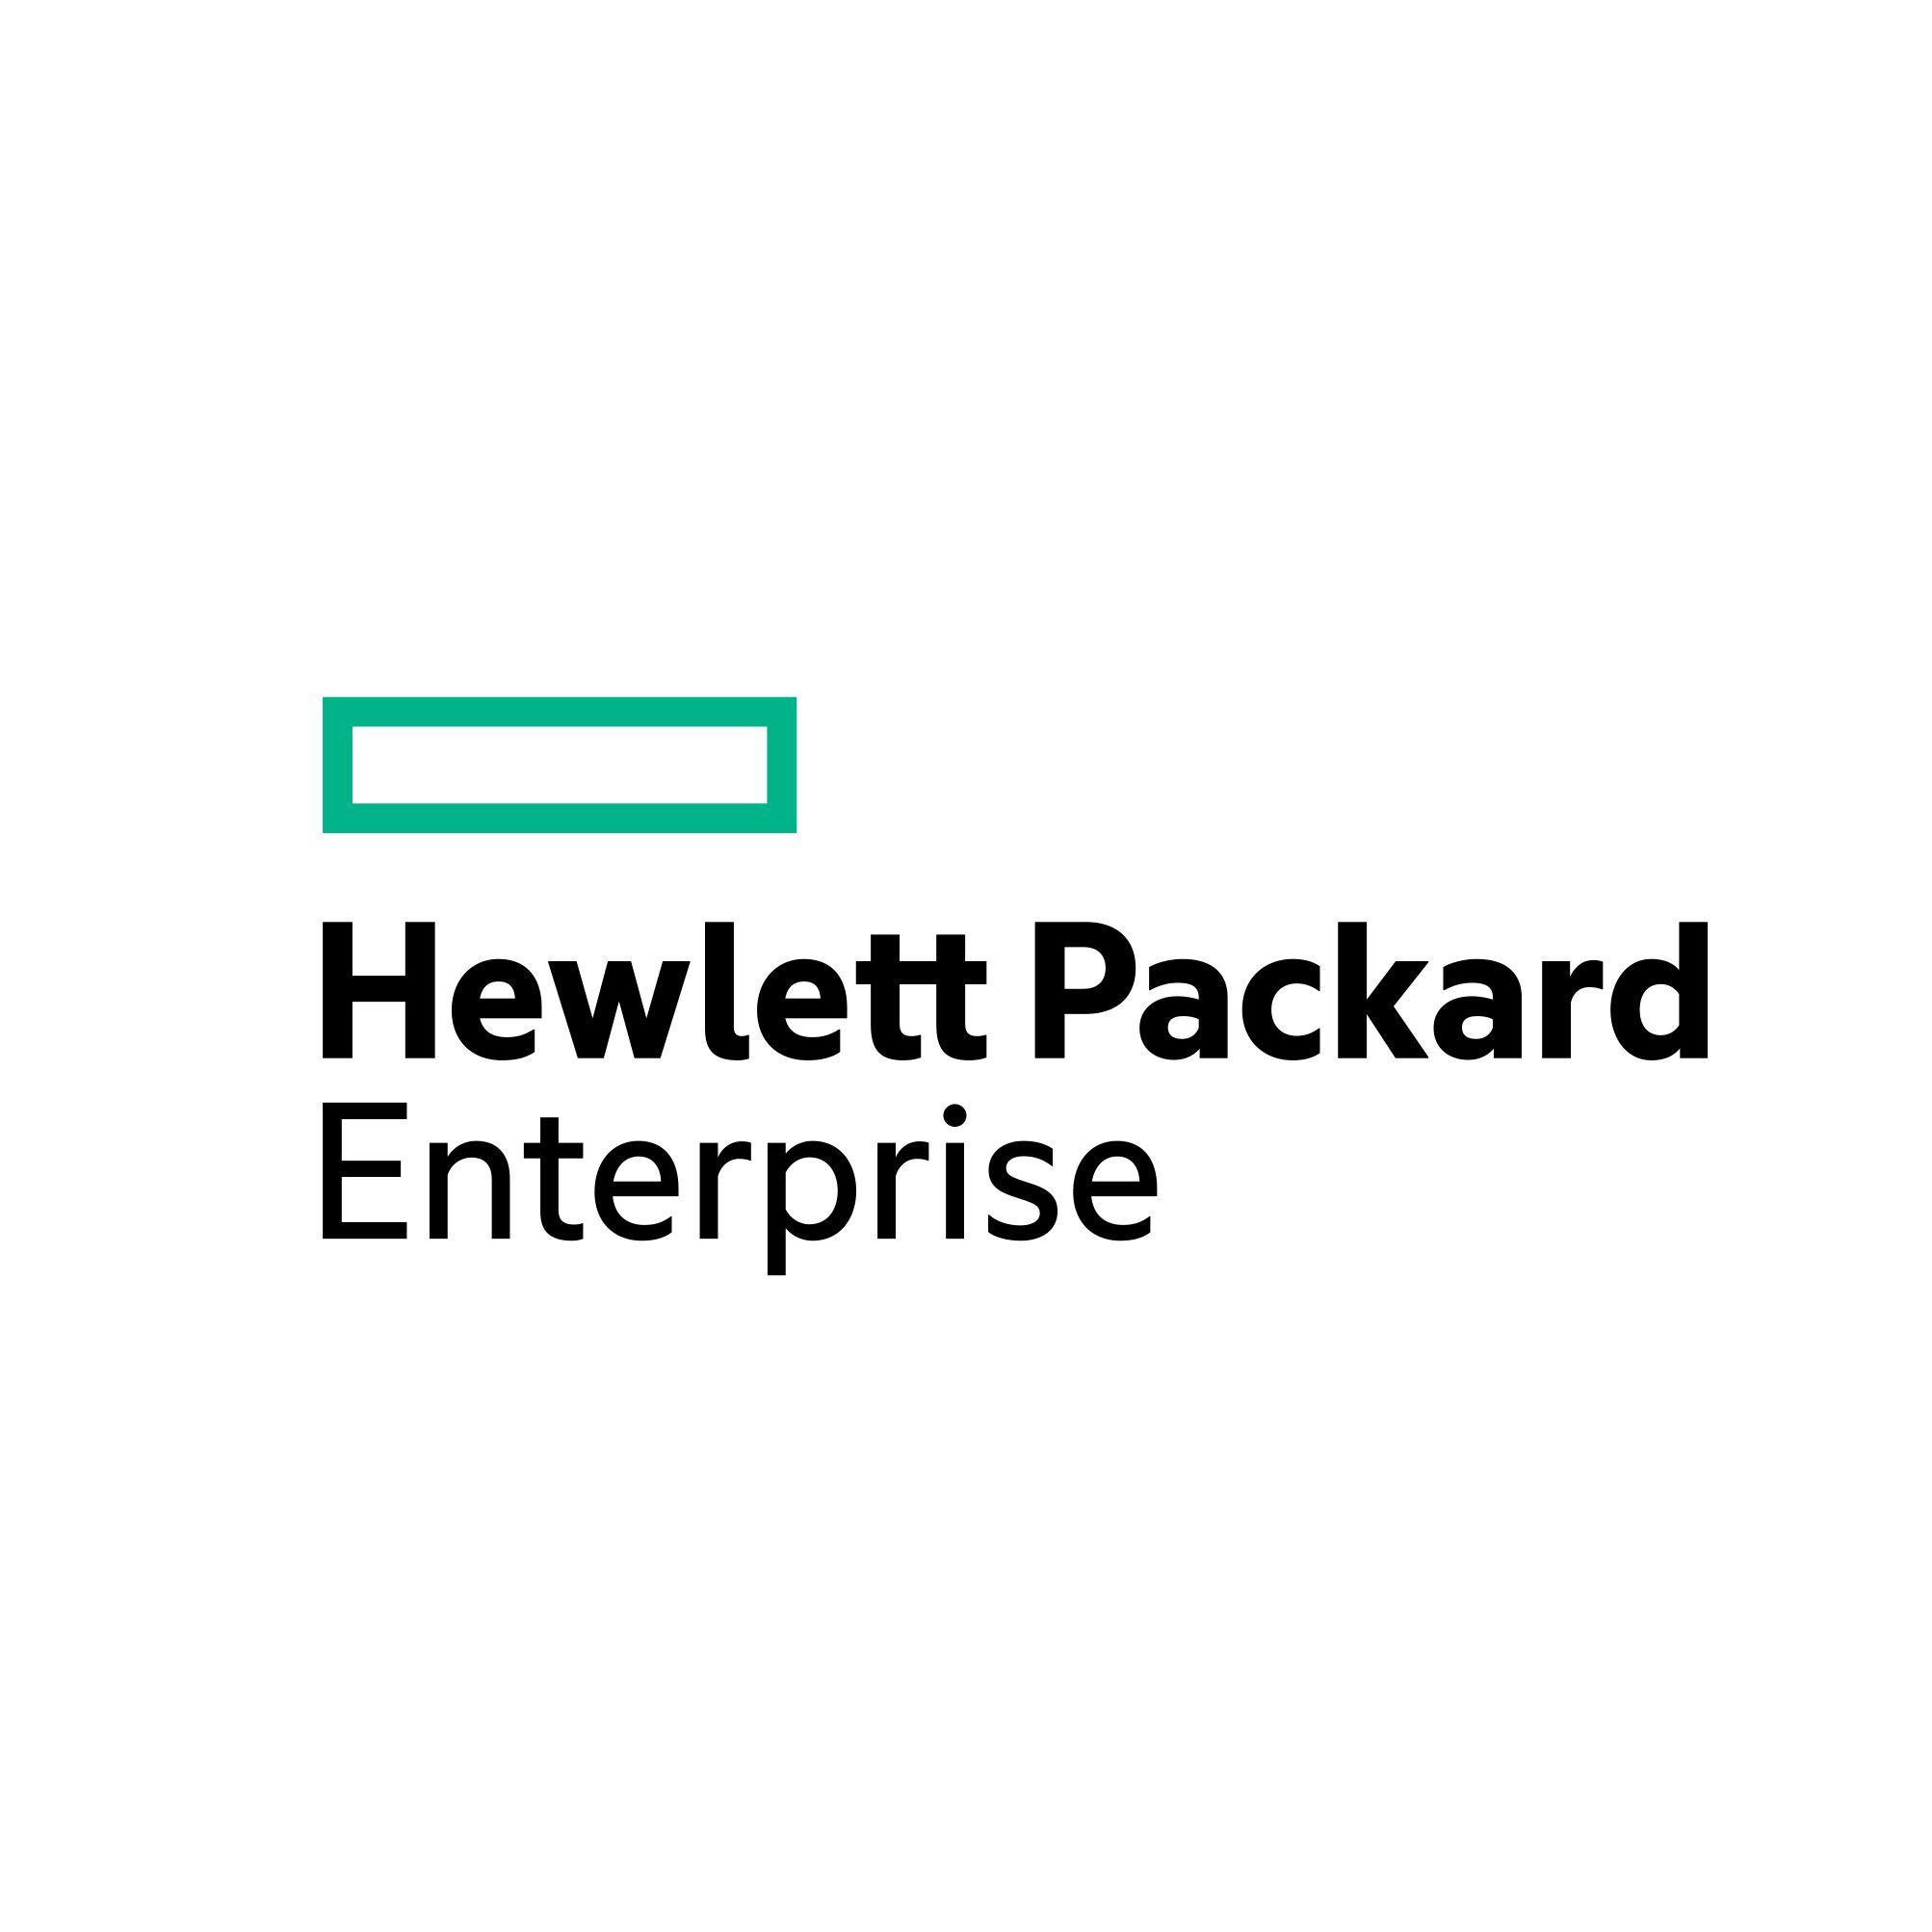 Latest HP Logo - Hewlett Packard Enterprise (HPE)